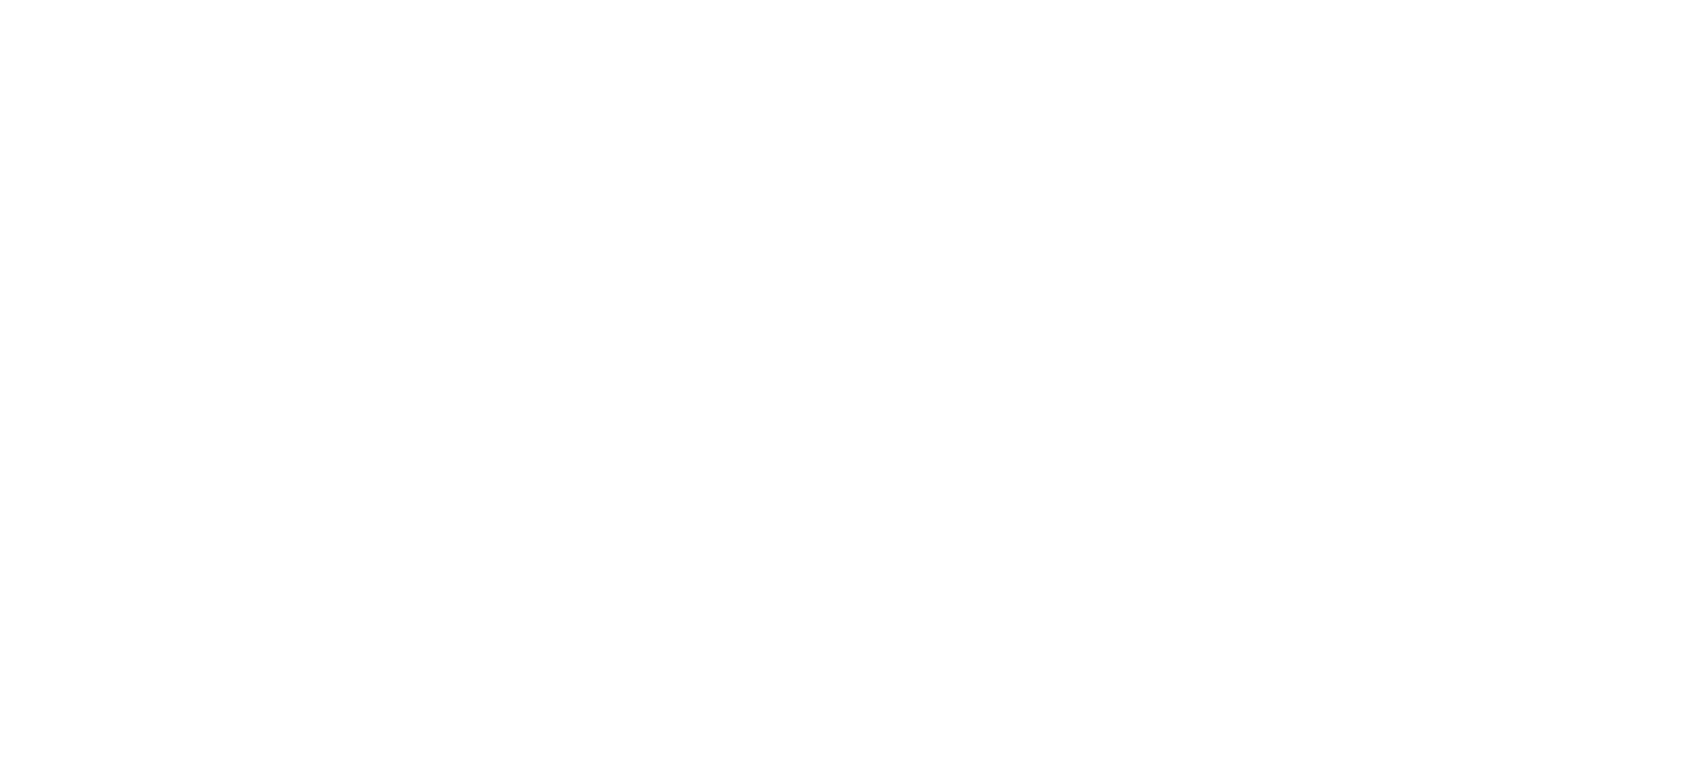 Global Wind Service logo